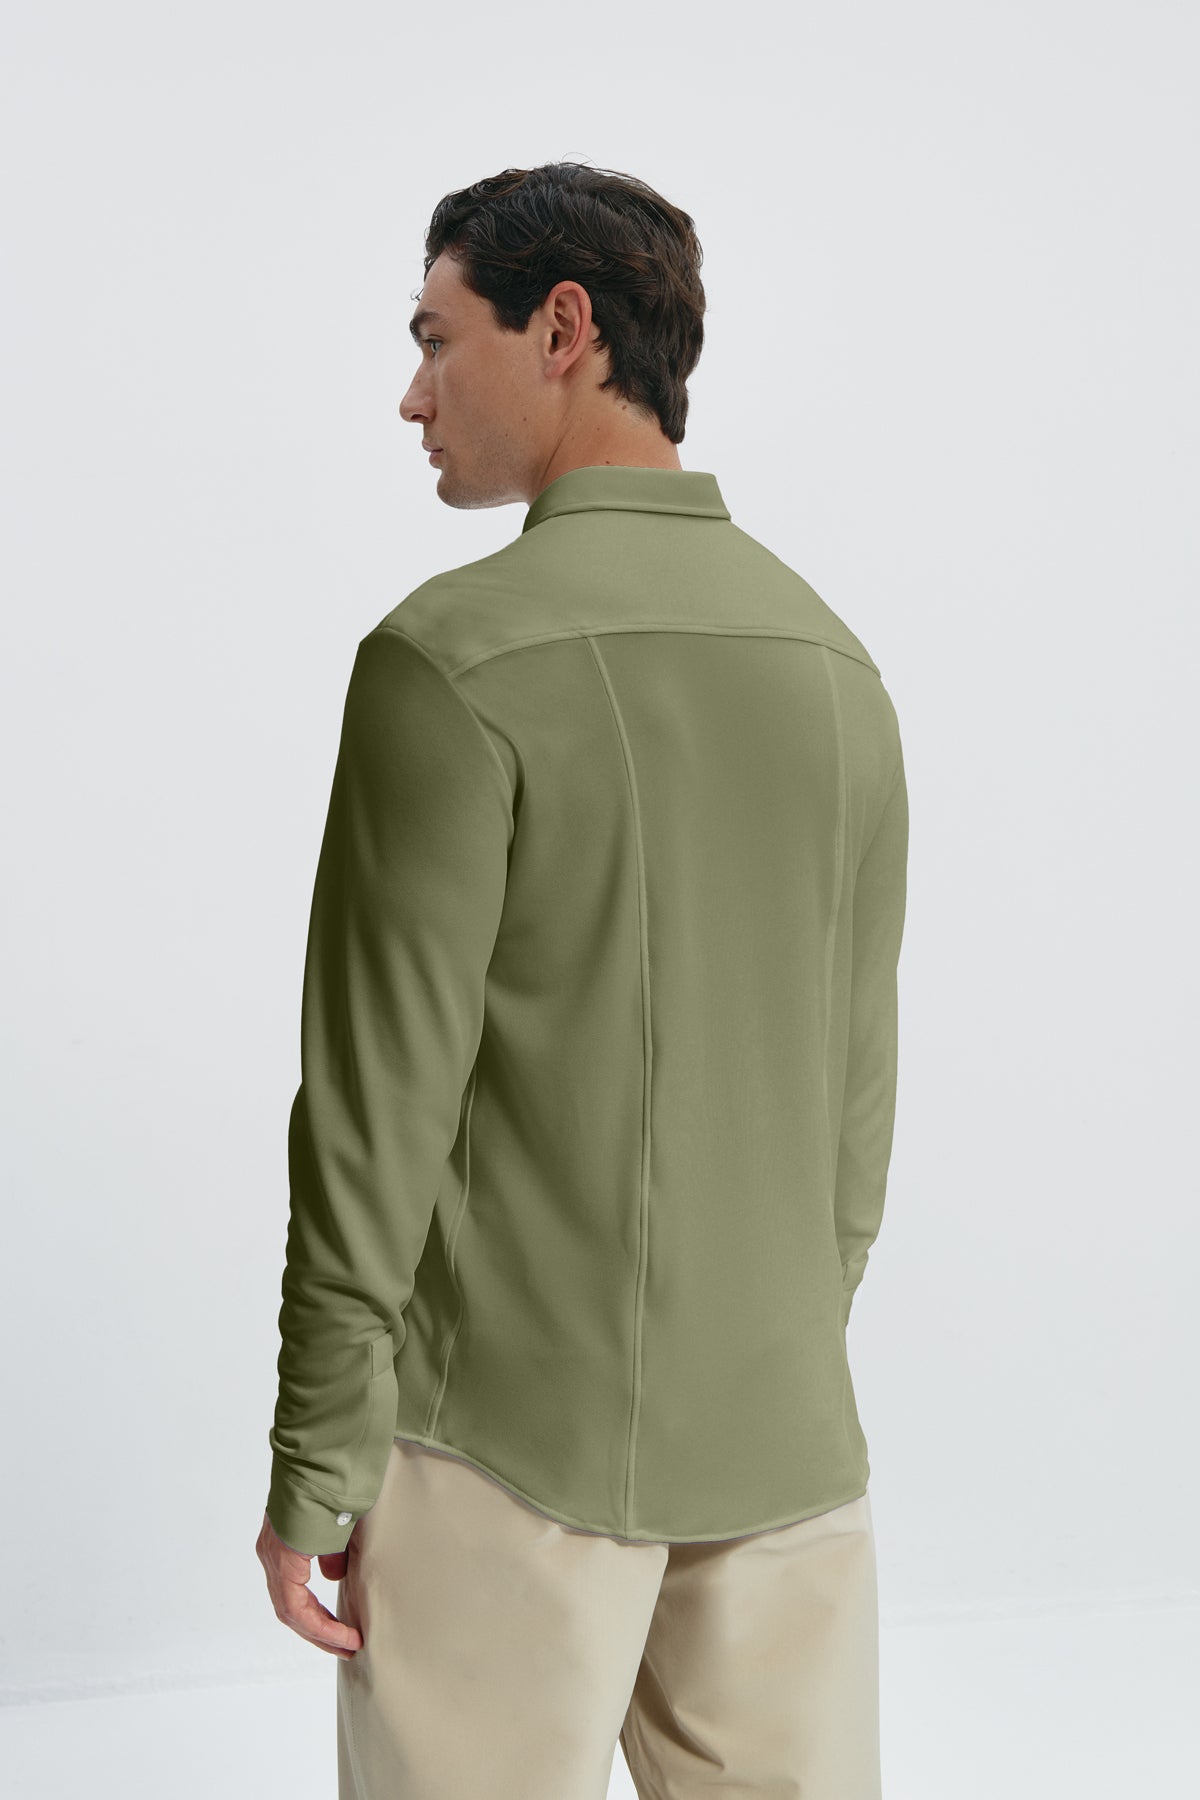 Camisa casual verde malaquita para hombre sin arrugas ni manchas. Manga larga, antiarrugas y antimanchas. Foto espalda